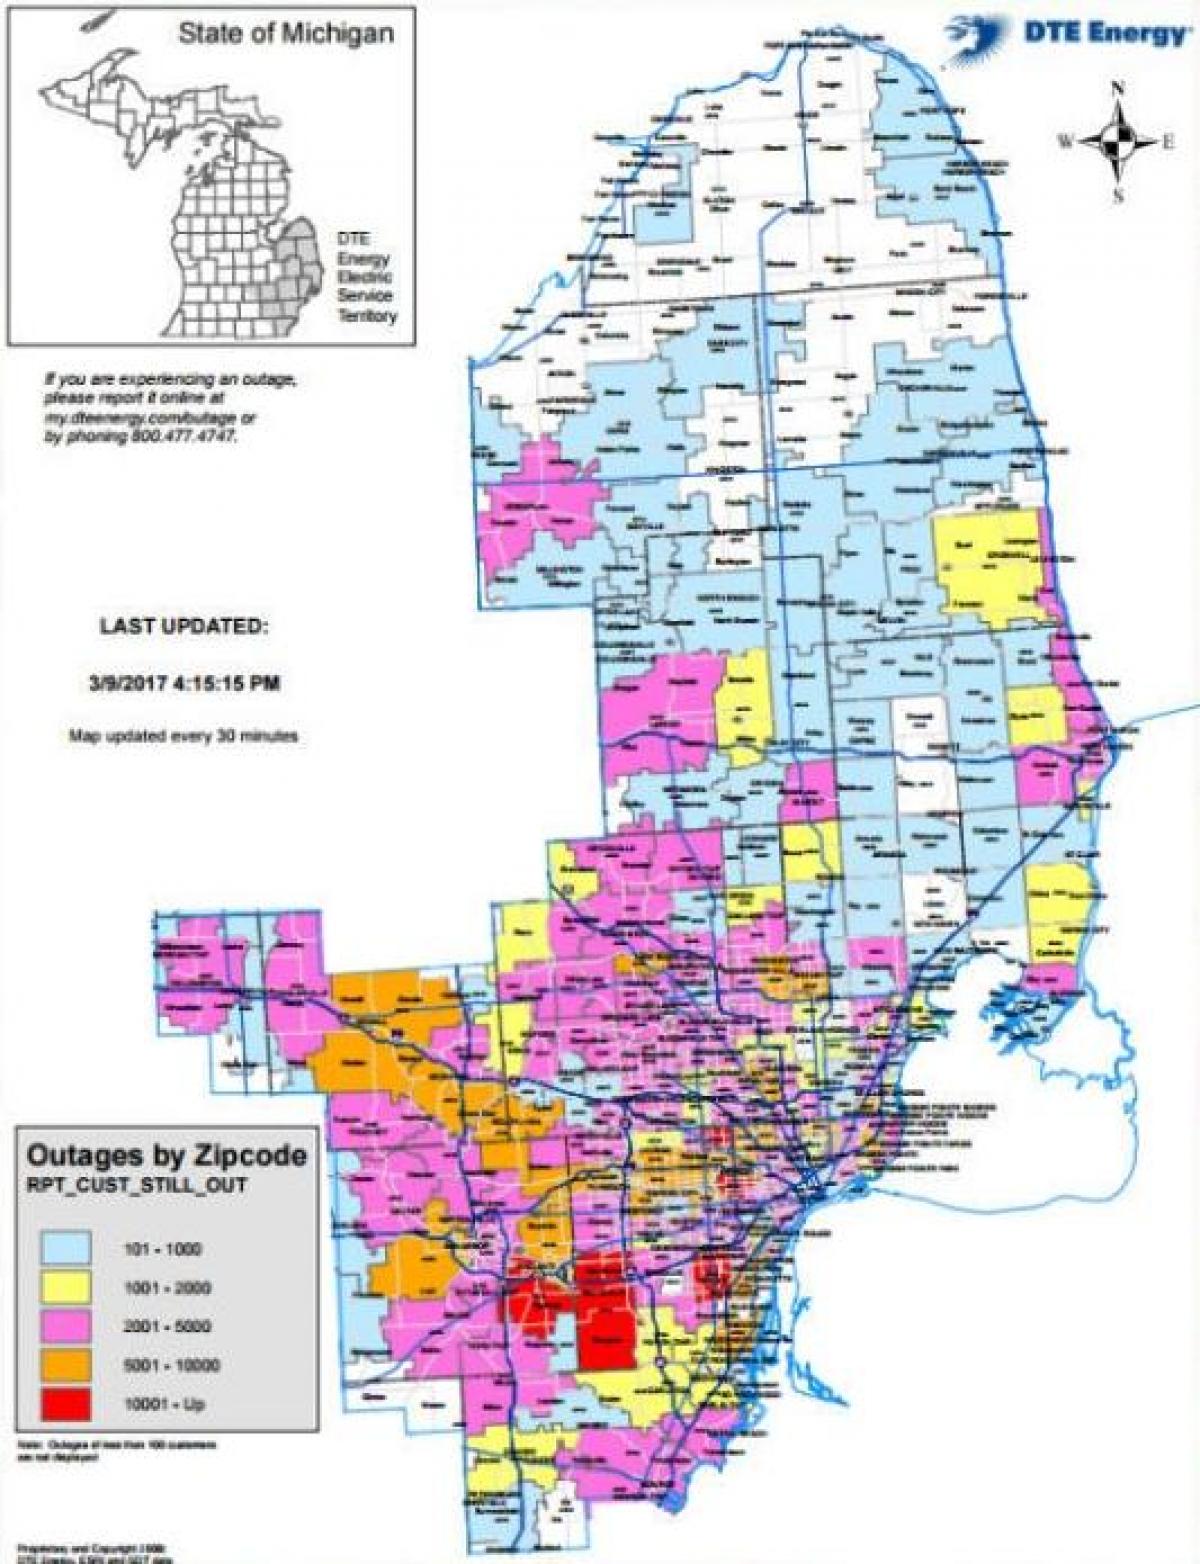 Detroit edison power outage map